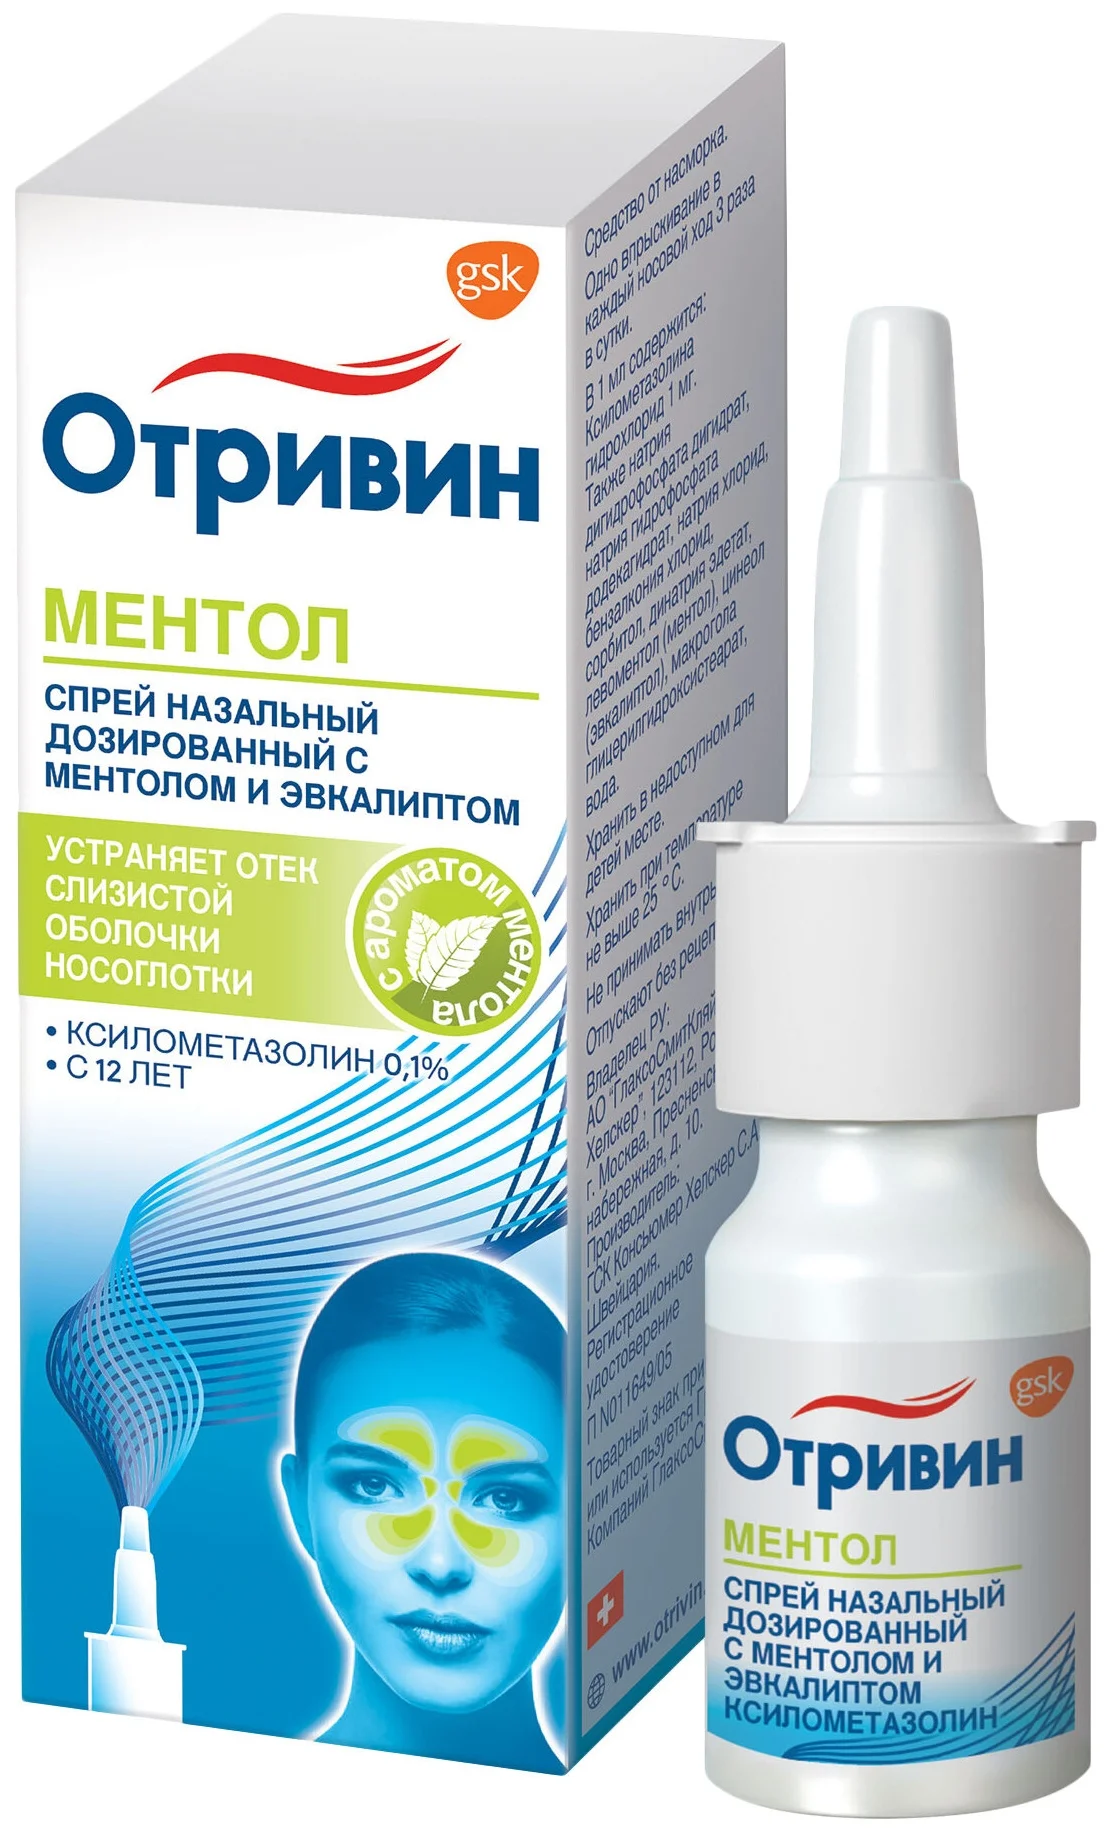 Отривин - лекарственный препарат